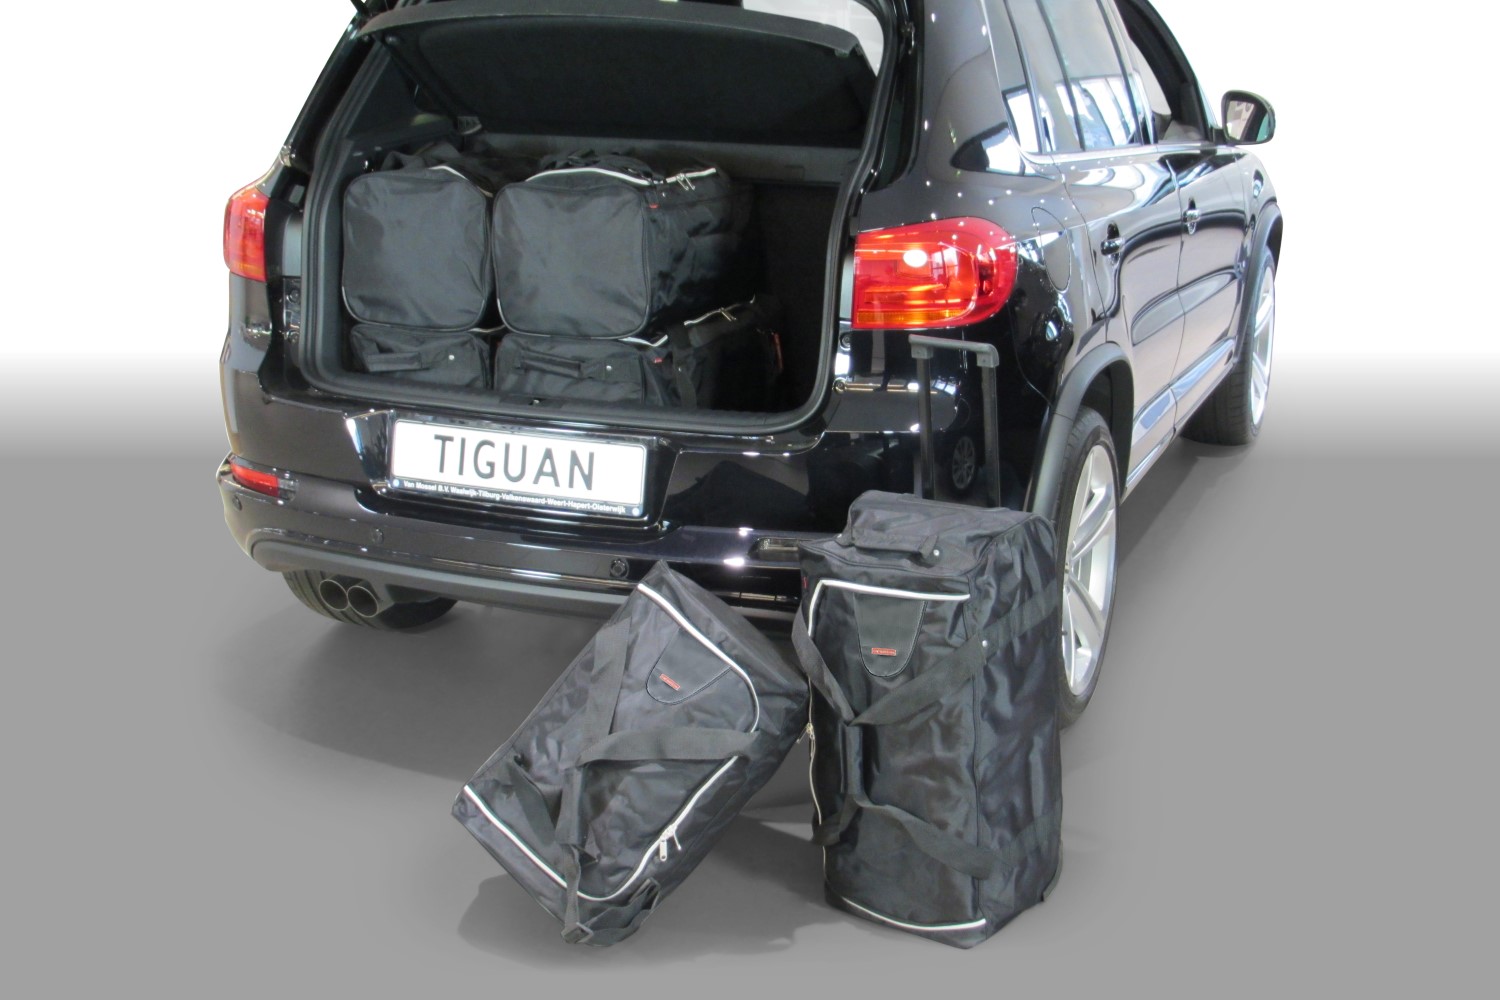 https://www.car-bags.com/images/stories/virtuemart/product/v11001s-volkswagen-tiguan-12-car-bags-1.jpg